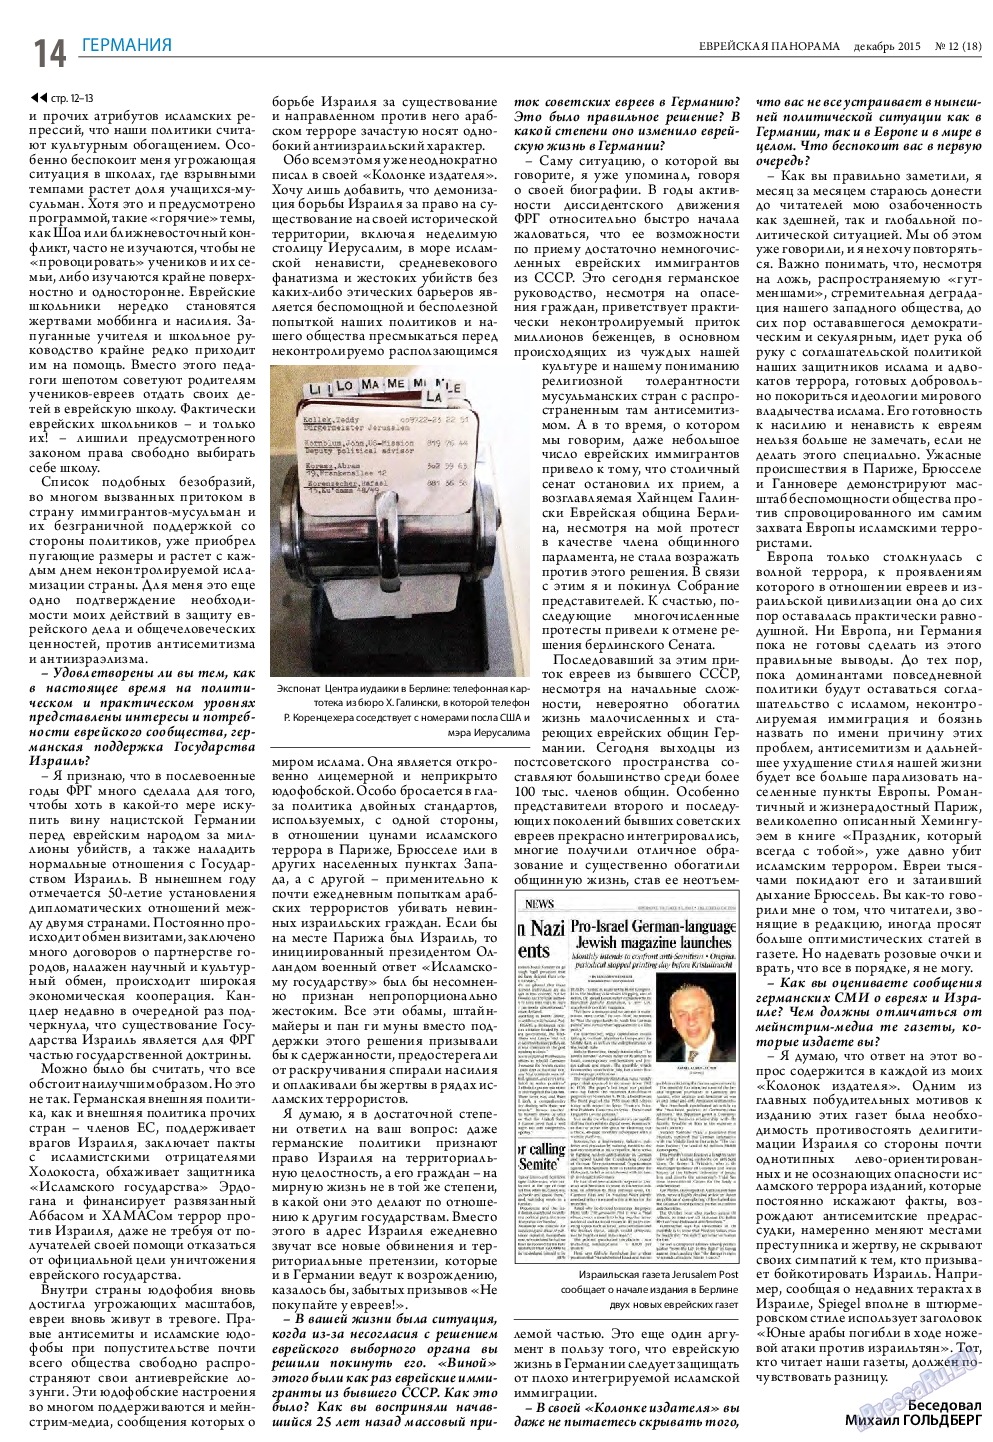 Еврейская панорама, газета. 2015 №12 стр.14